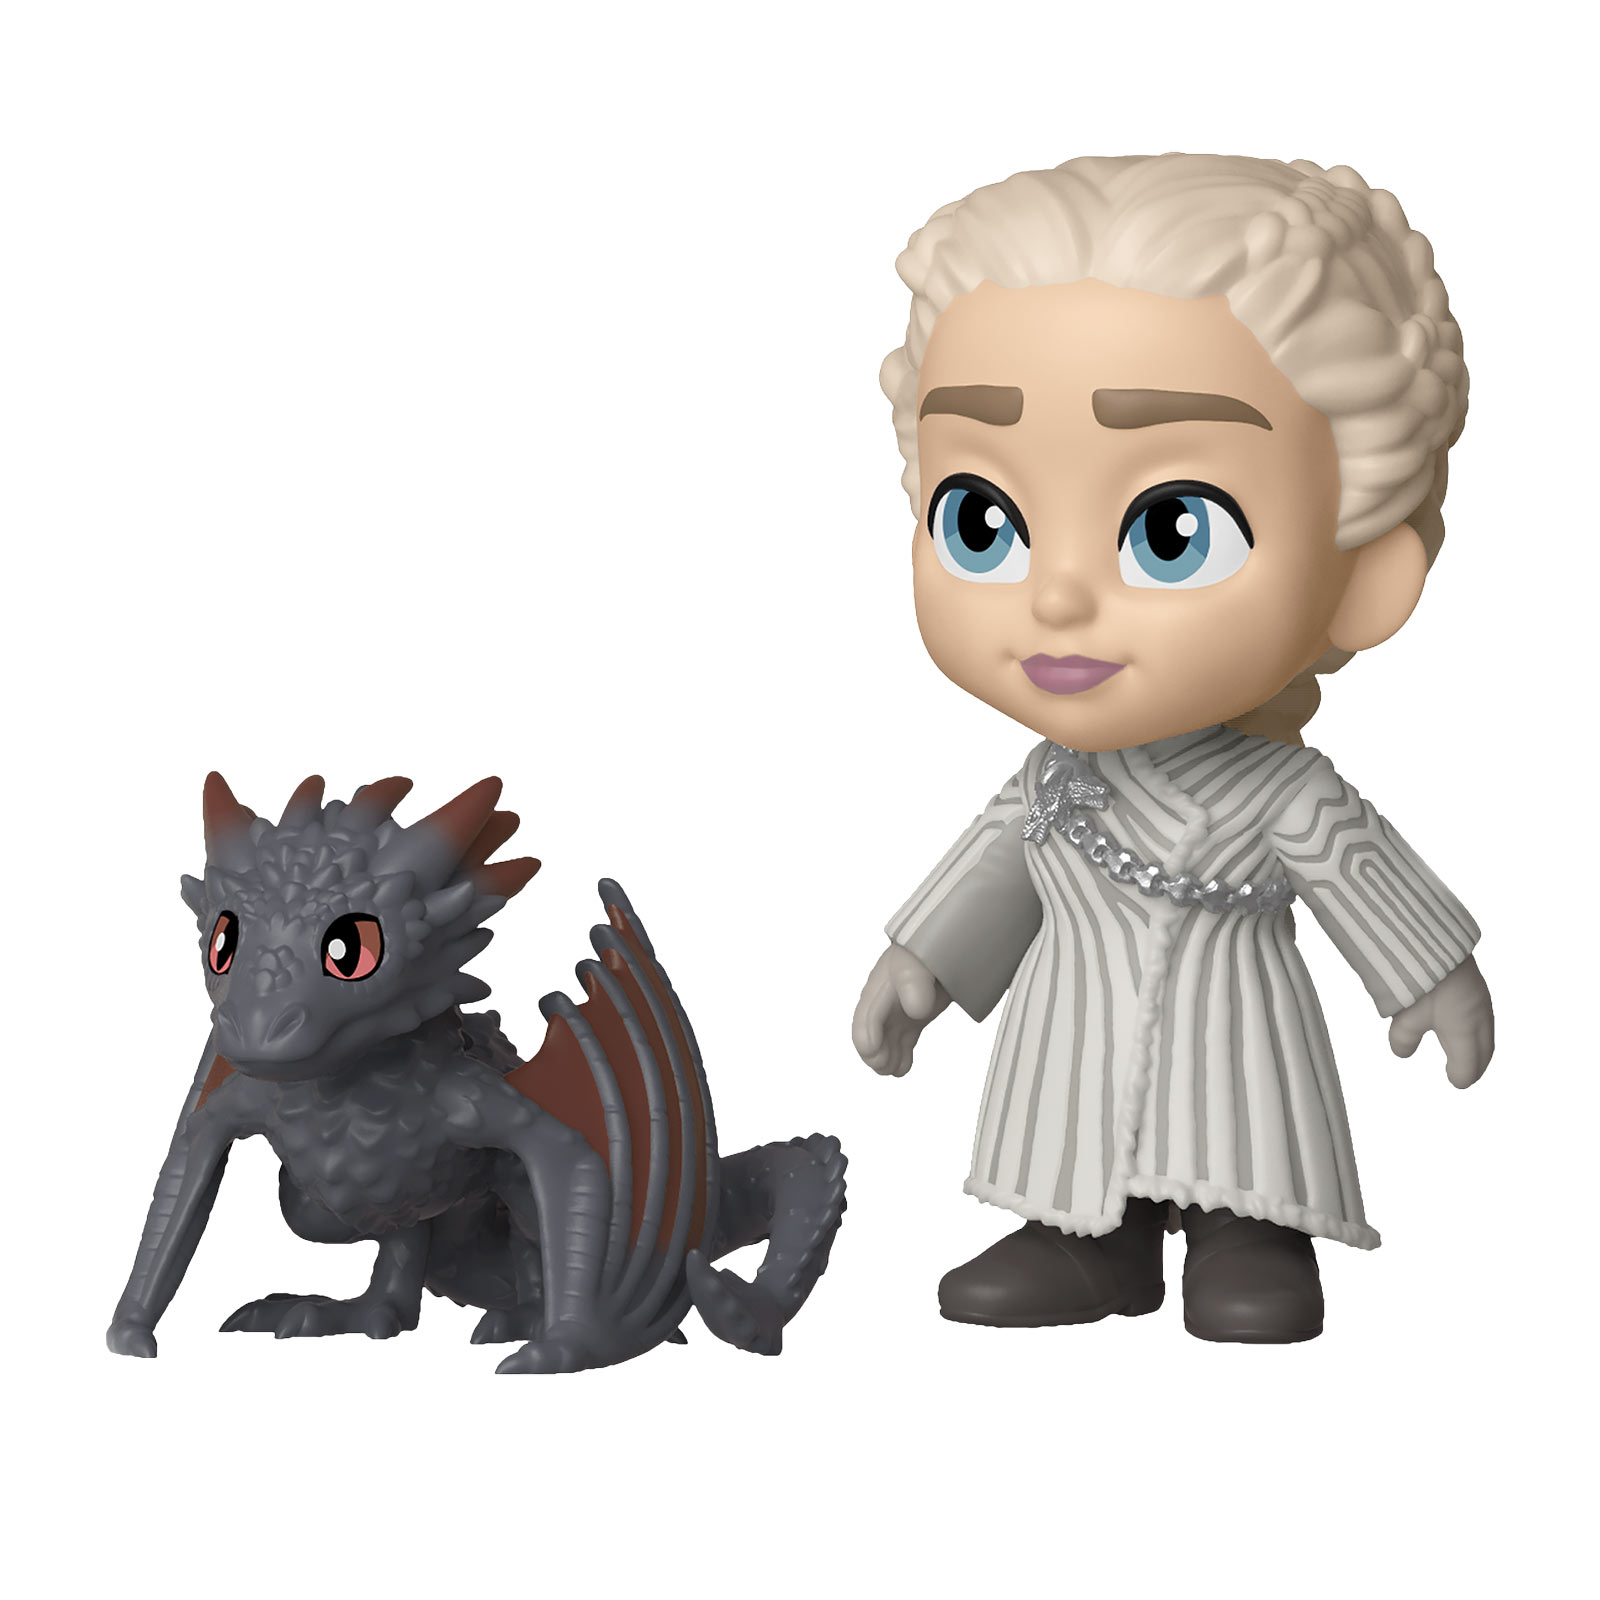 Game of Thrones - Daenerys Targaryen Funko Five Star Figurine